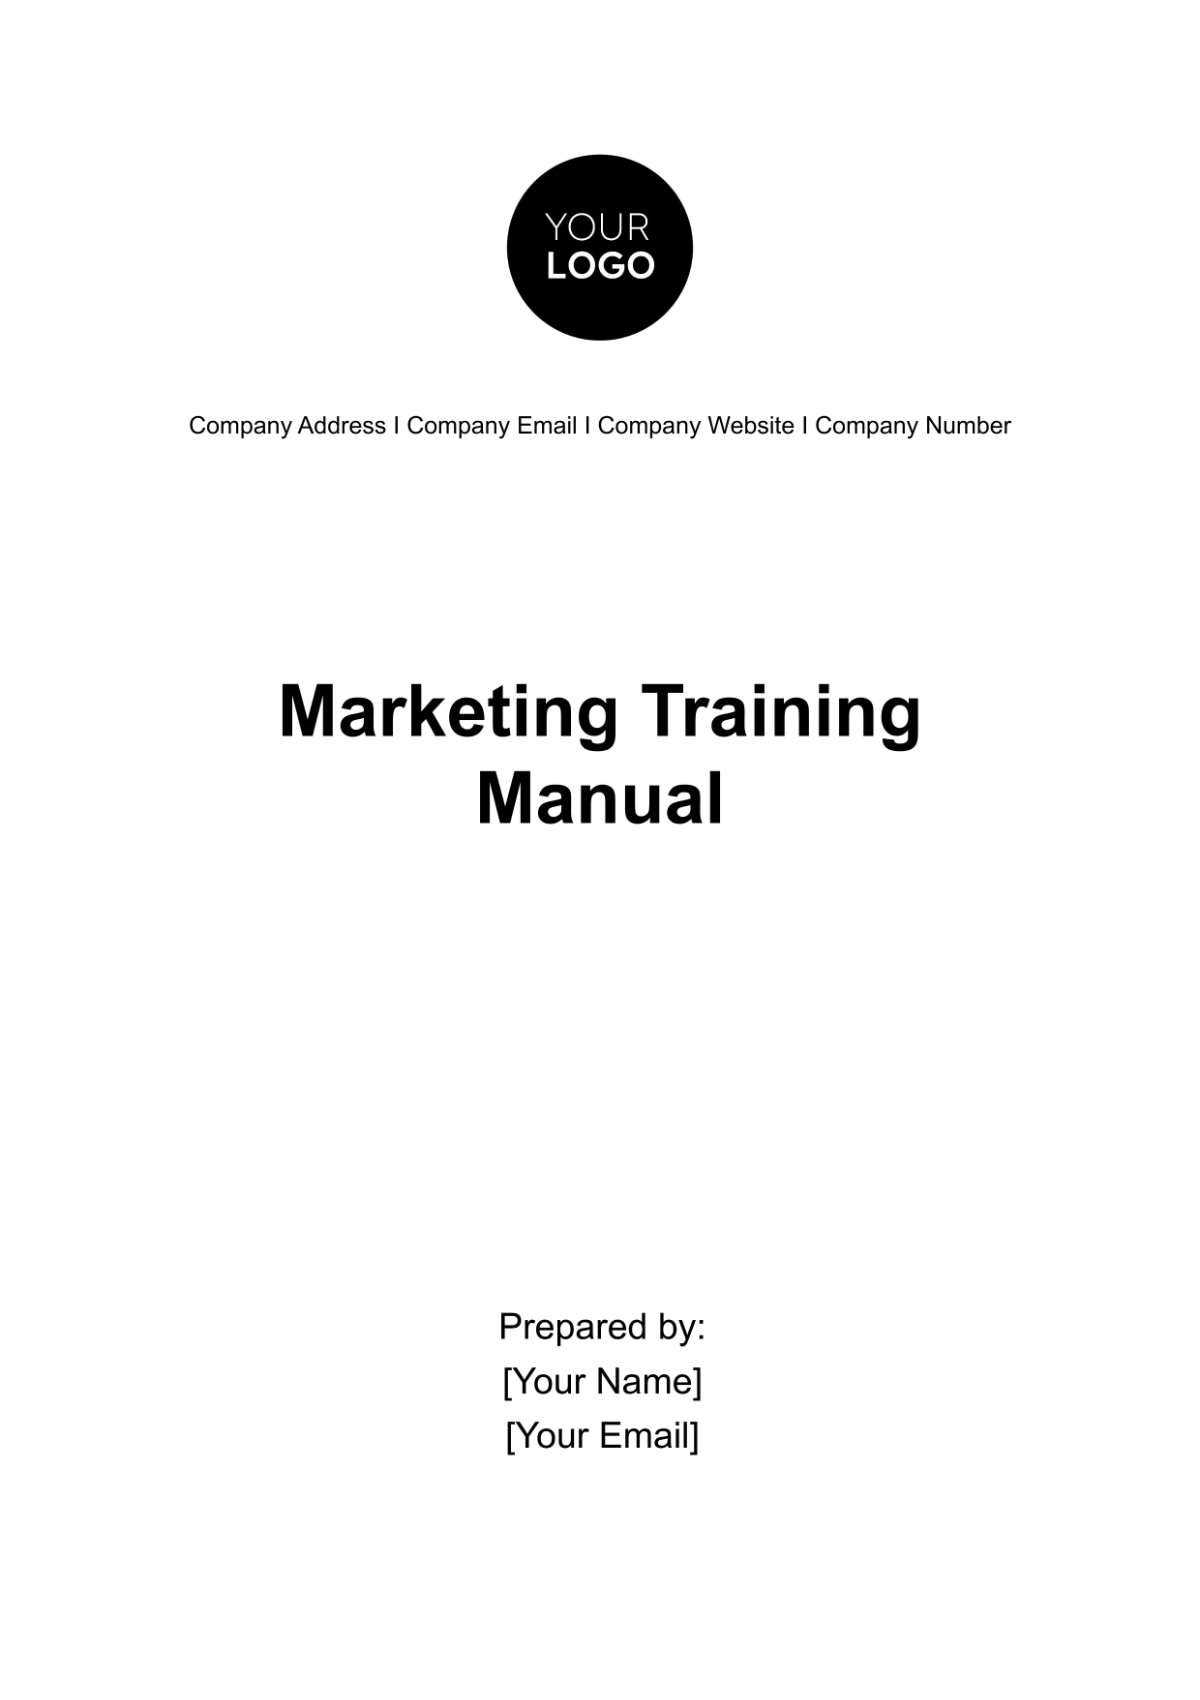 Marketing Training Manual Template